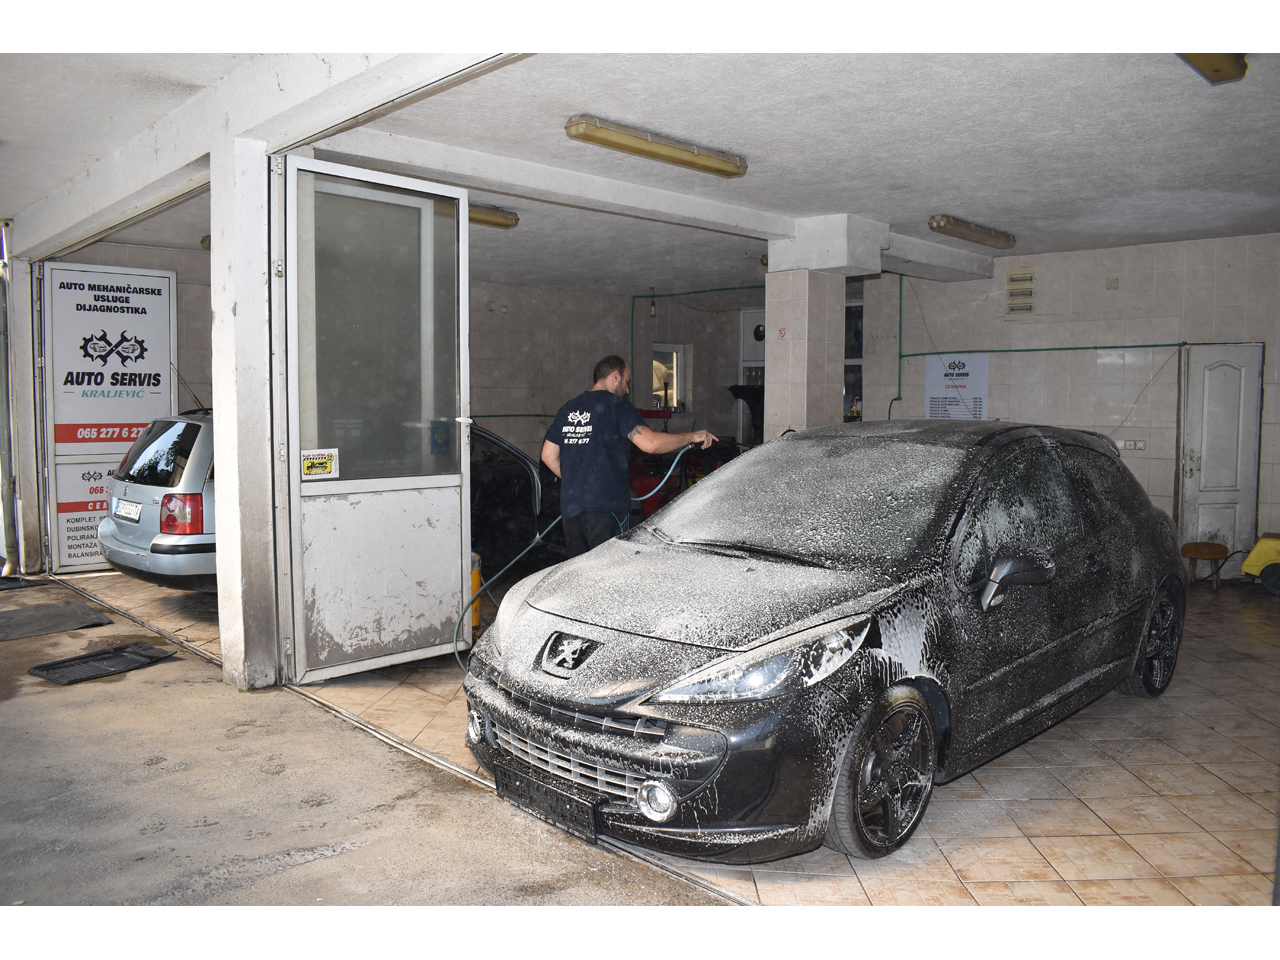 Photo 2 - AUTO SERVICE KRALJEVIC - CAR WASH, VULCANIZER, CAR REPAIRS Car wash Belgrade